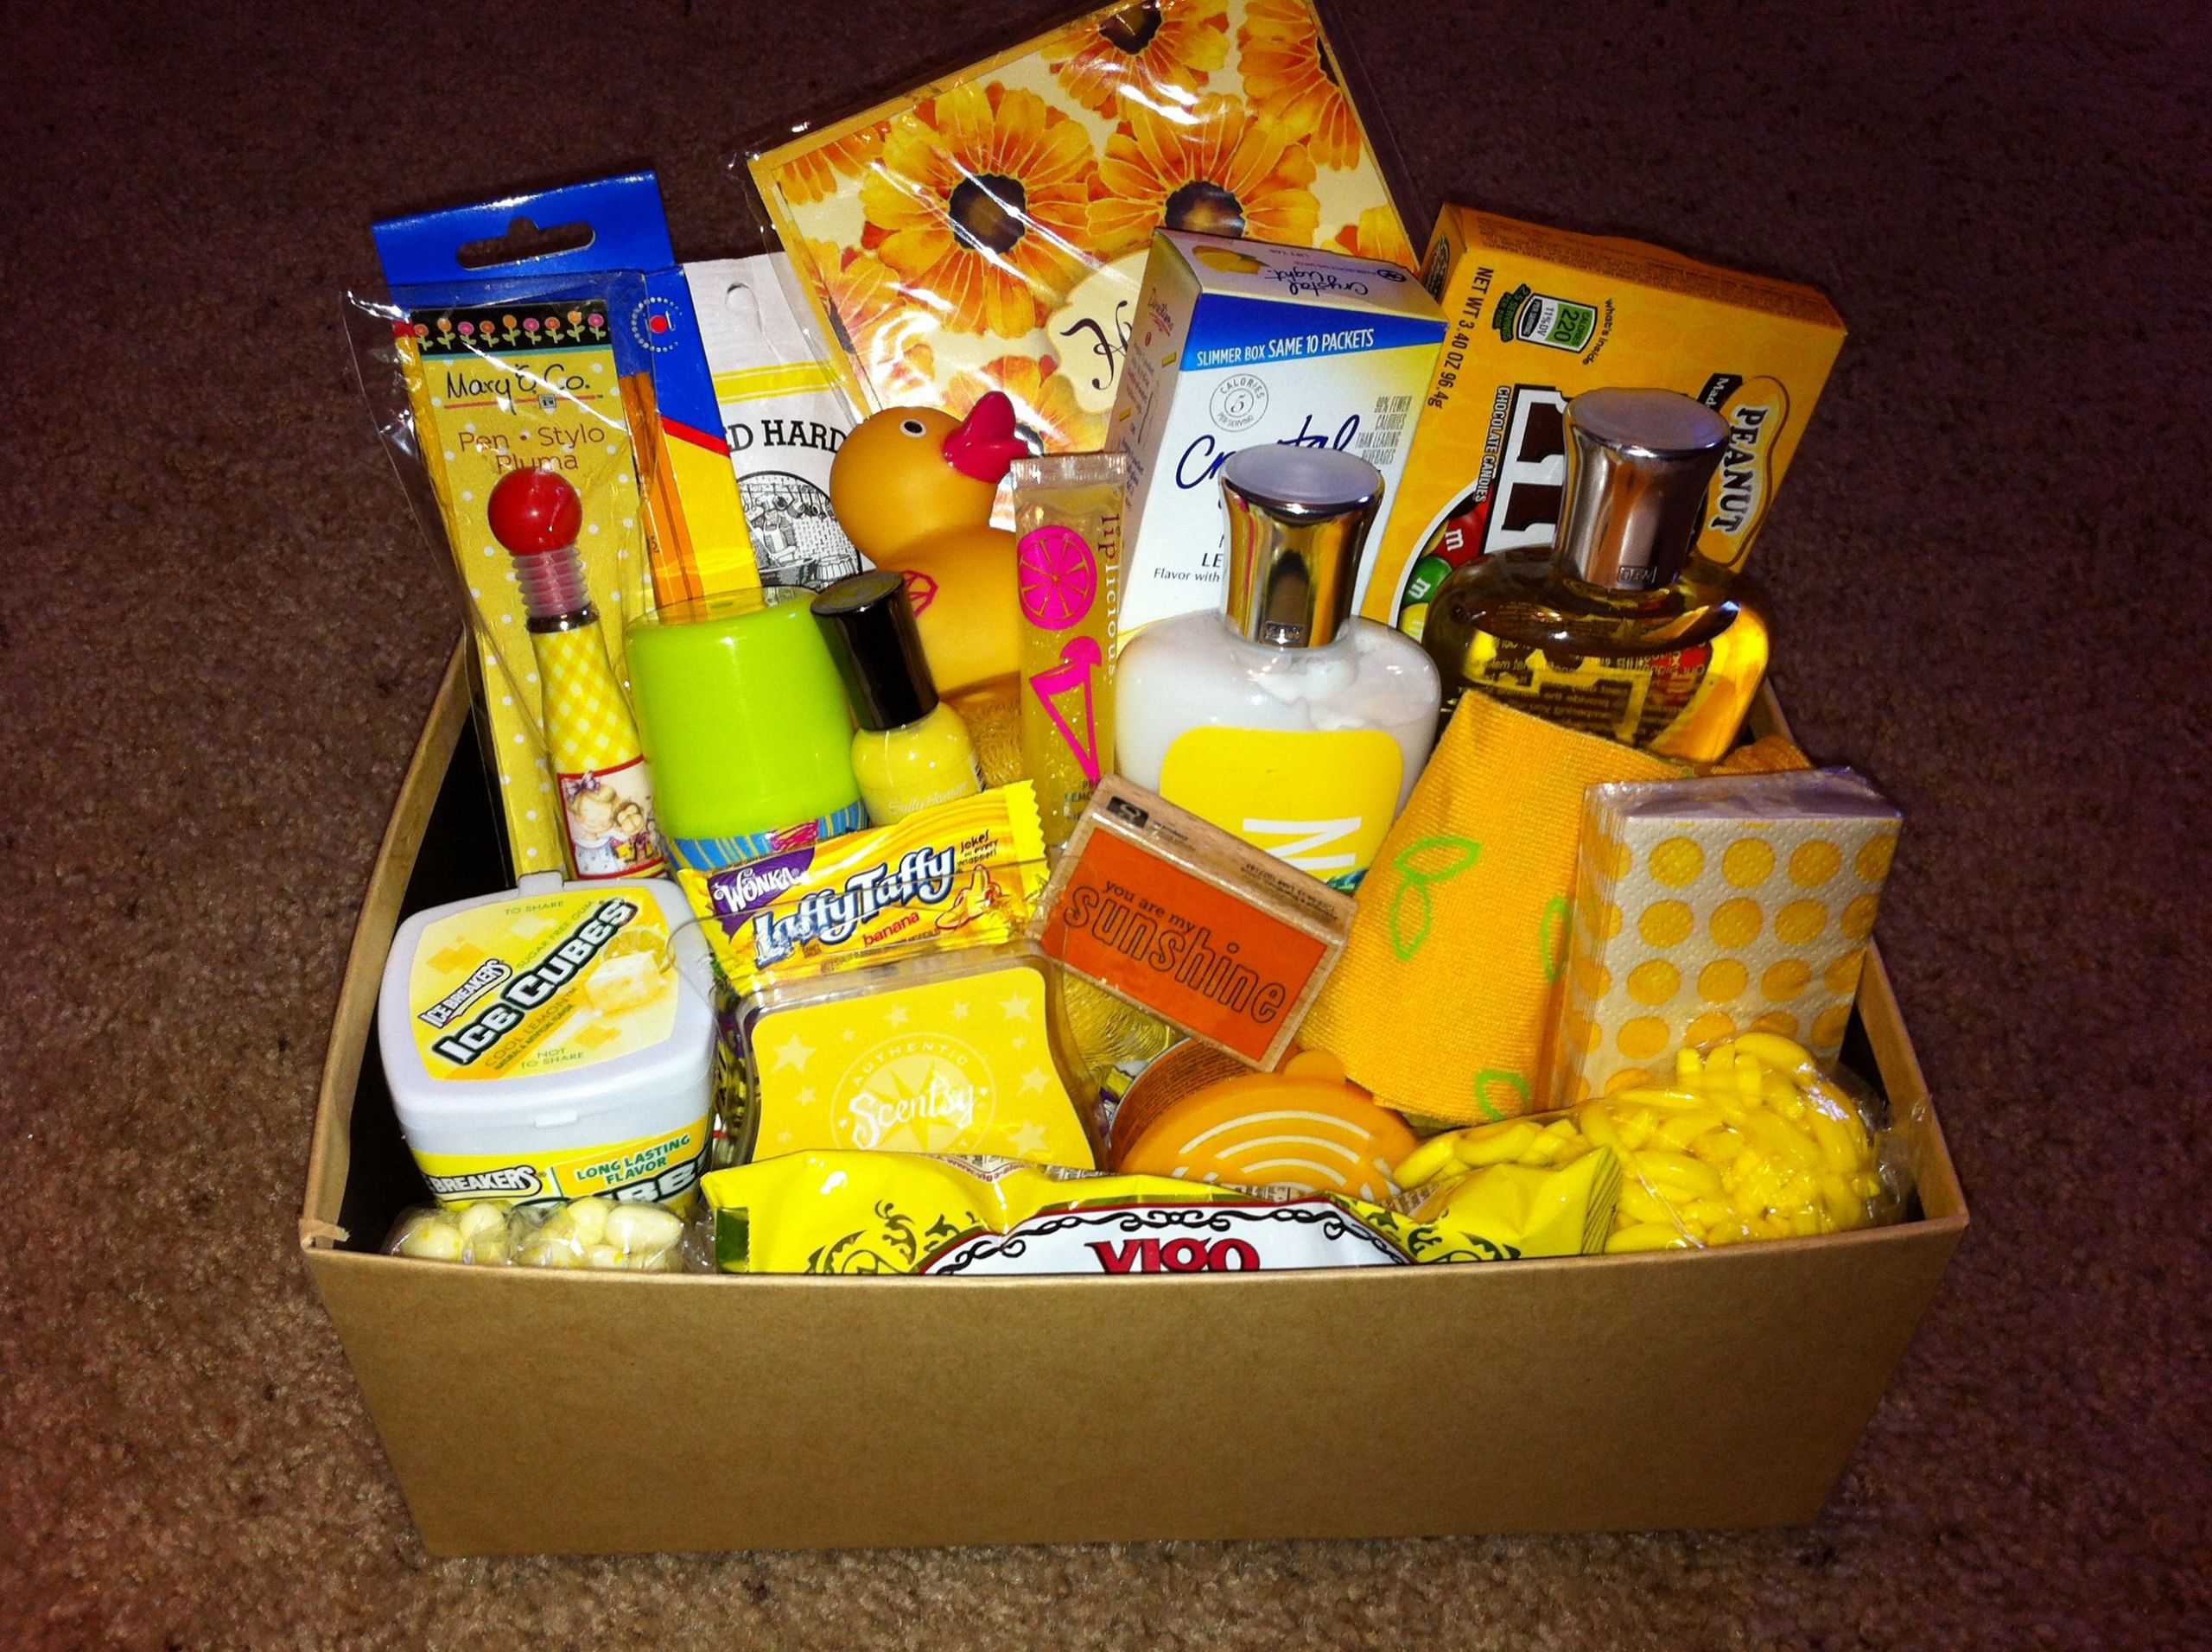 Birthday Box Gift Ideas
 "Box of sunshine" my best friend made this for my birthday